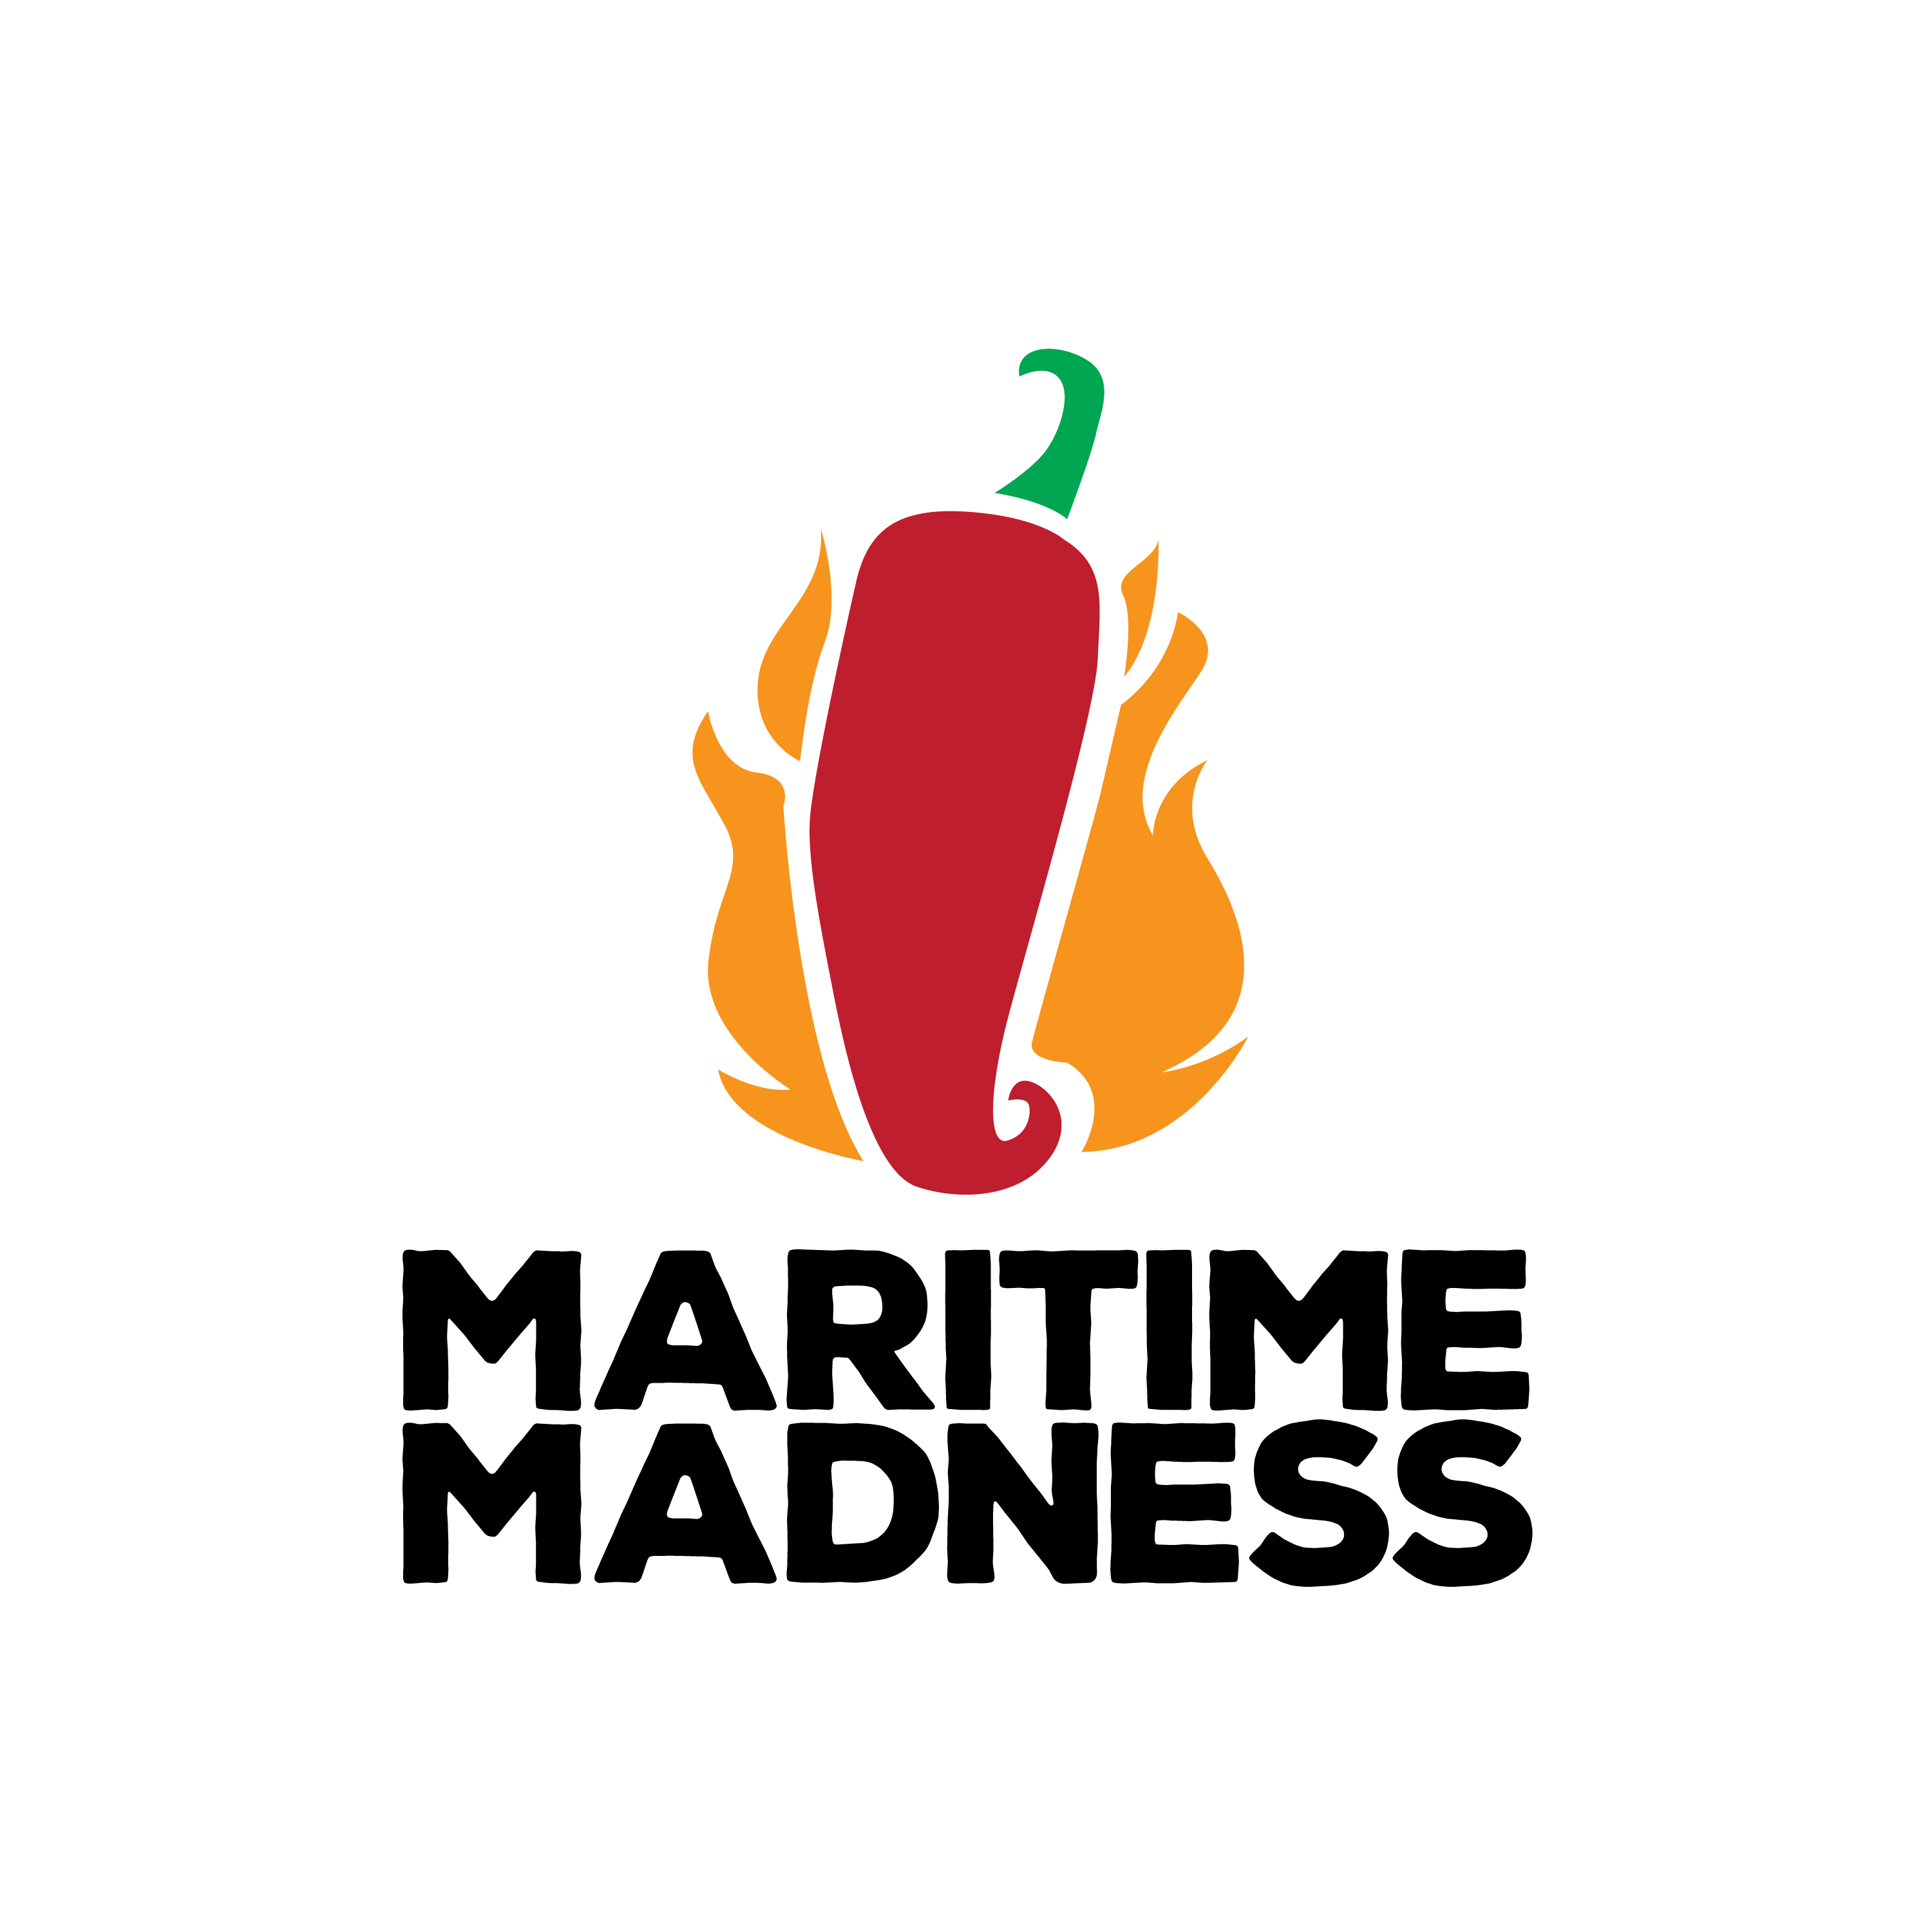 maritime-madness-logo-main-01.jpg